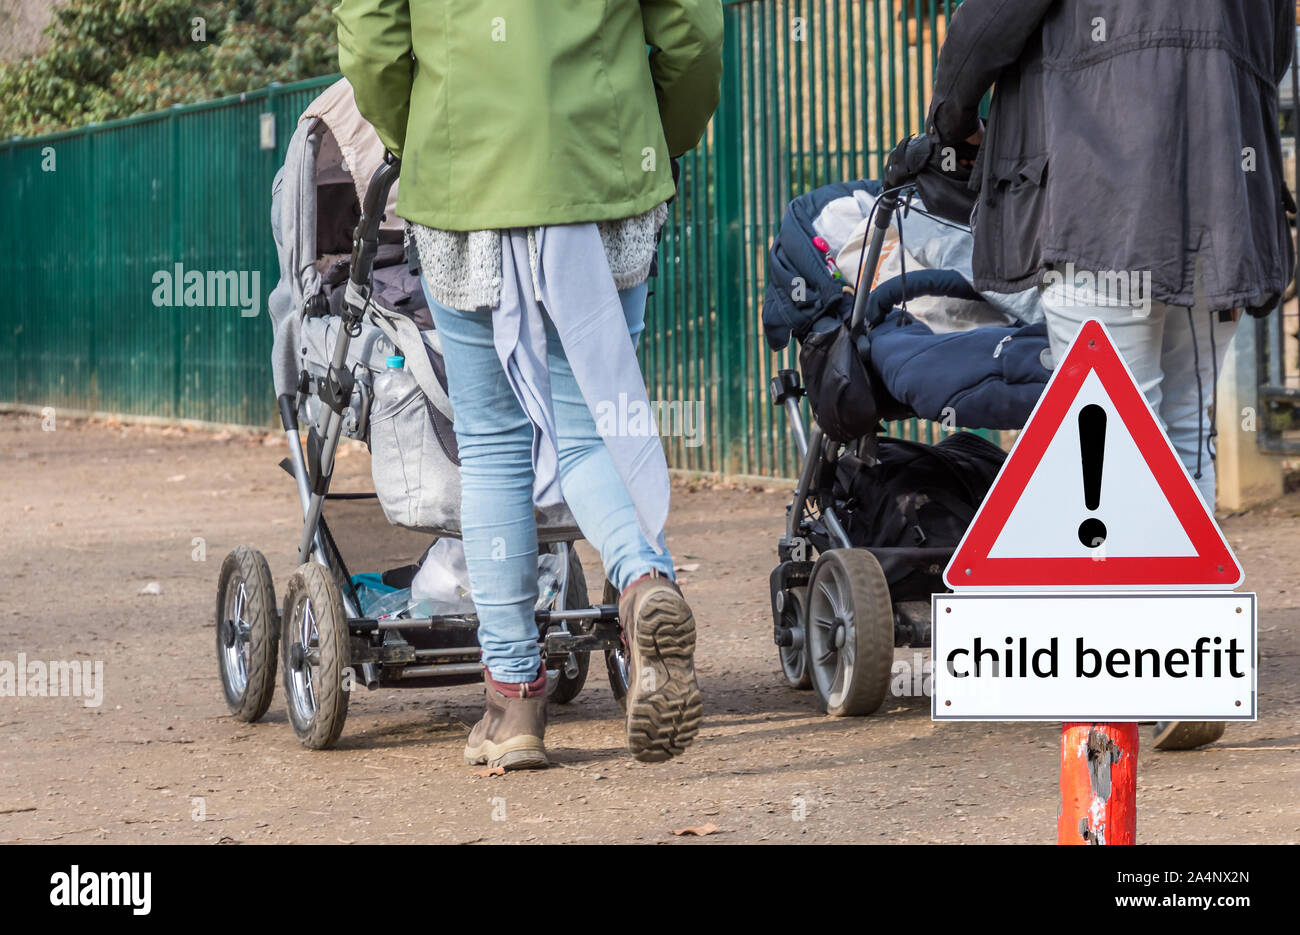 Warning Sign 'child benefit' Stock Photo